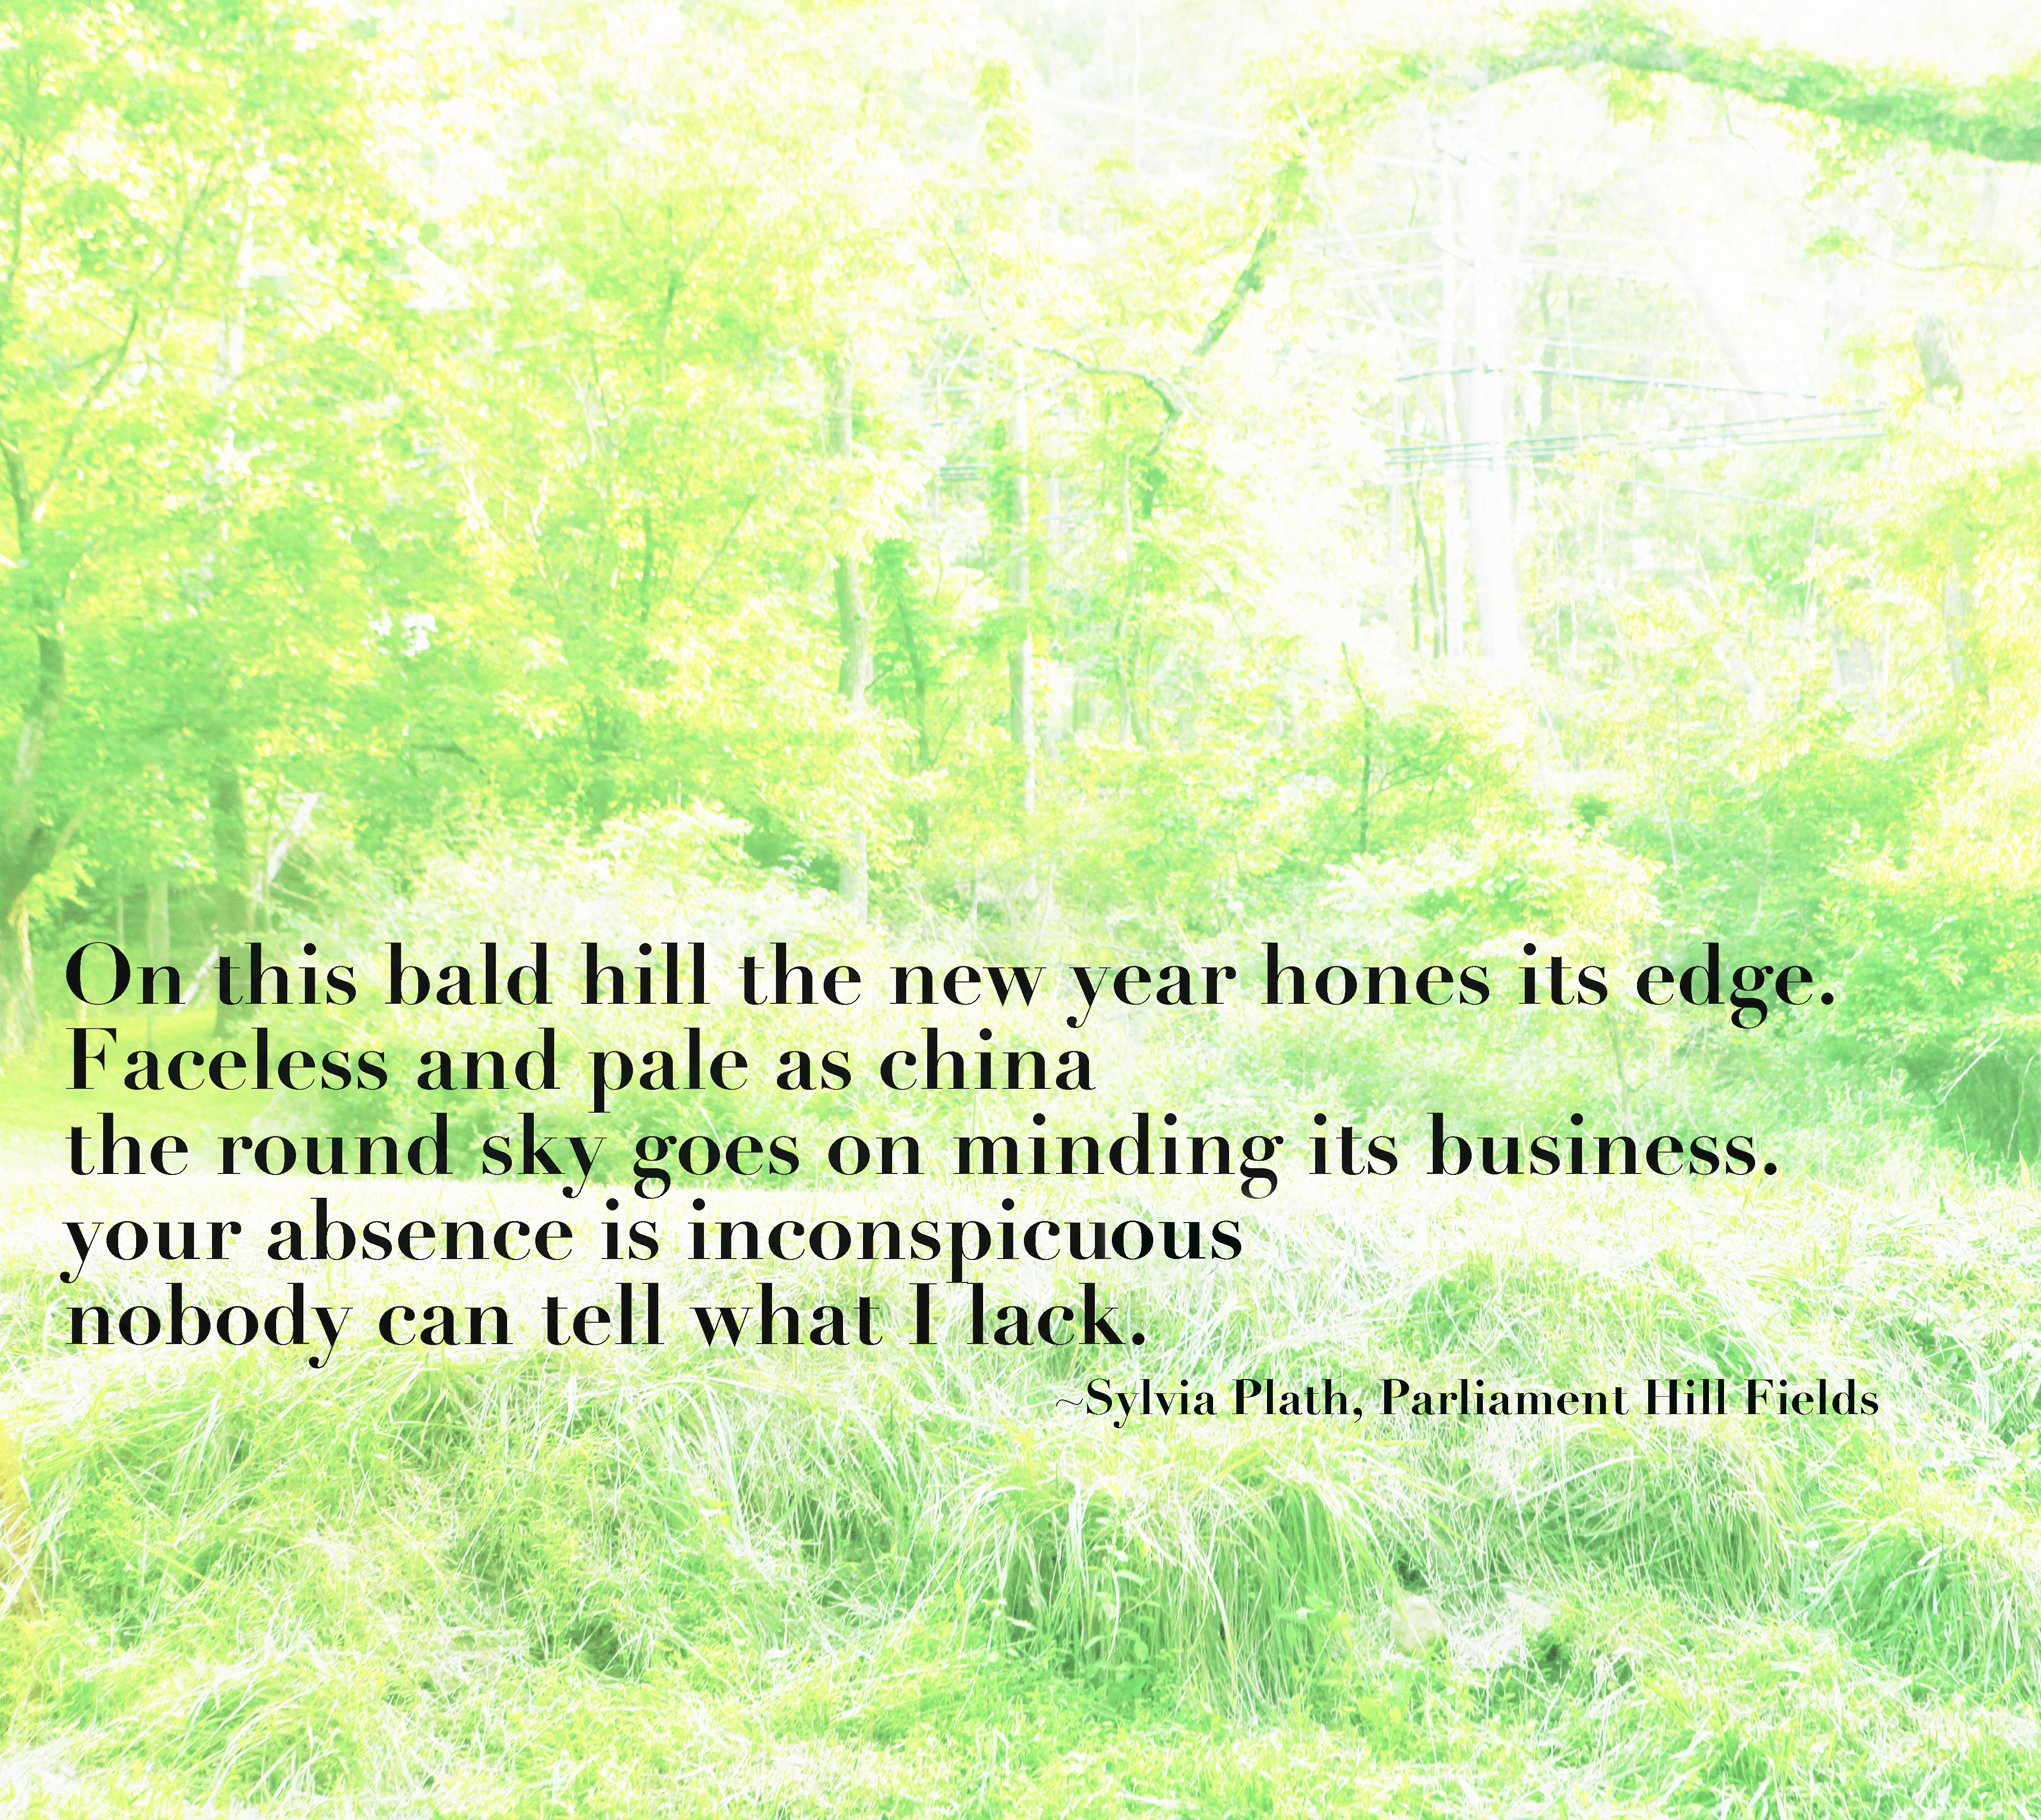 Sylvia Plath's Parliament Hill Fields: Poem Miscarriage